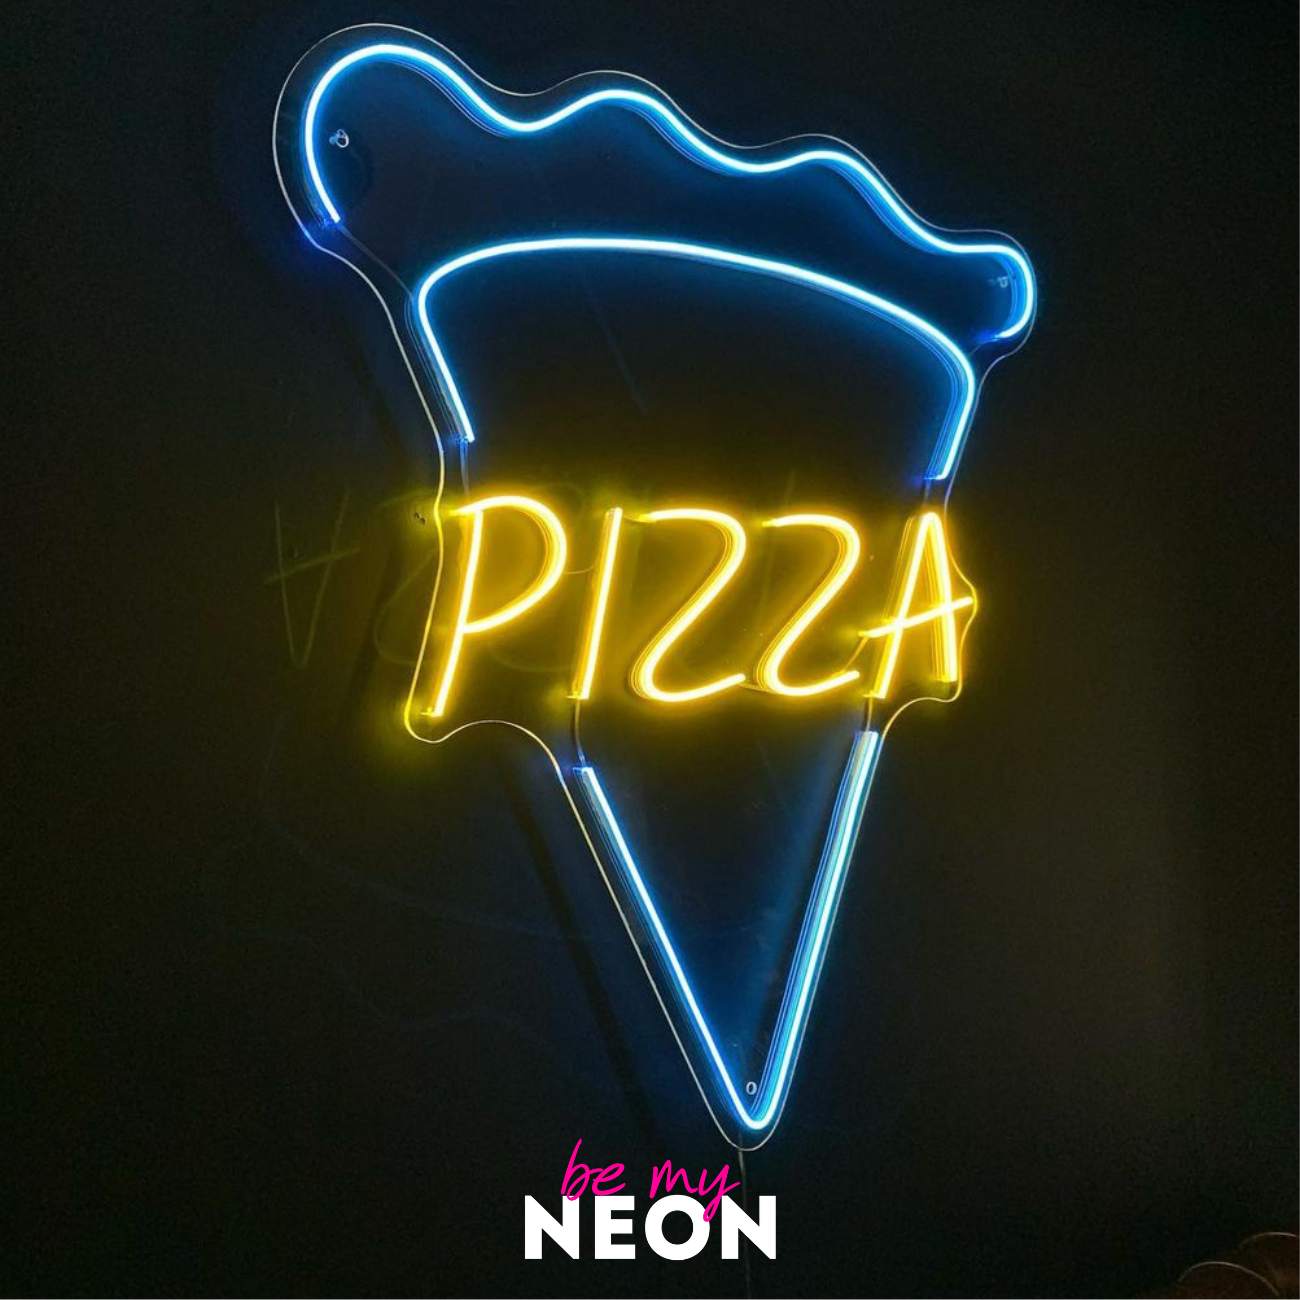 "Pizza Eck" LED Neonschild